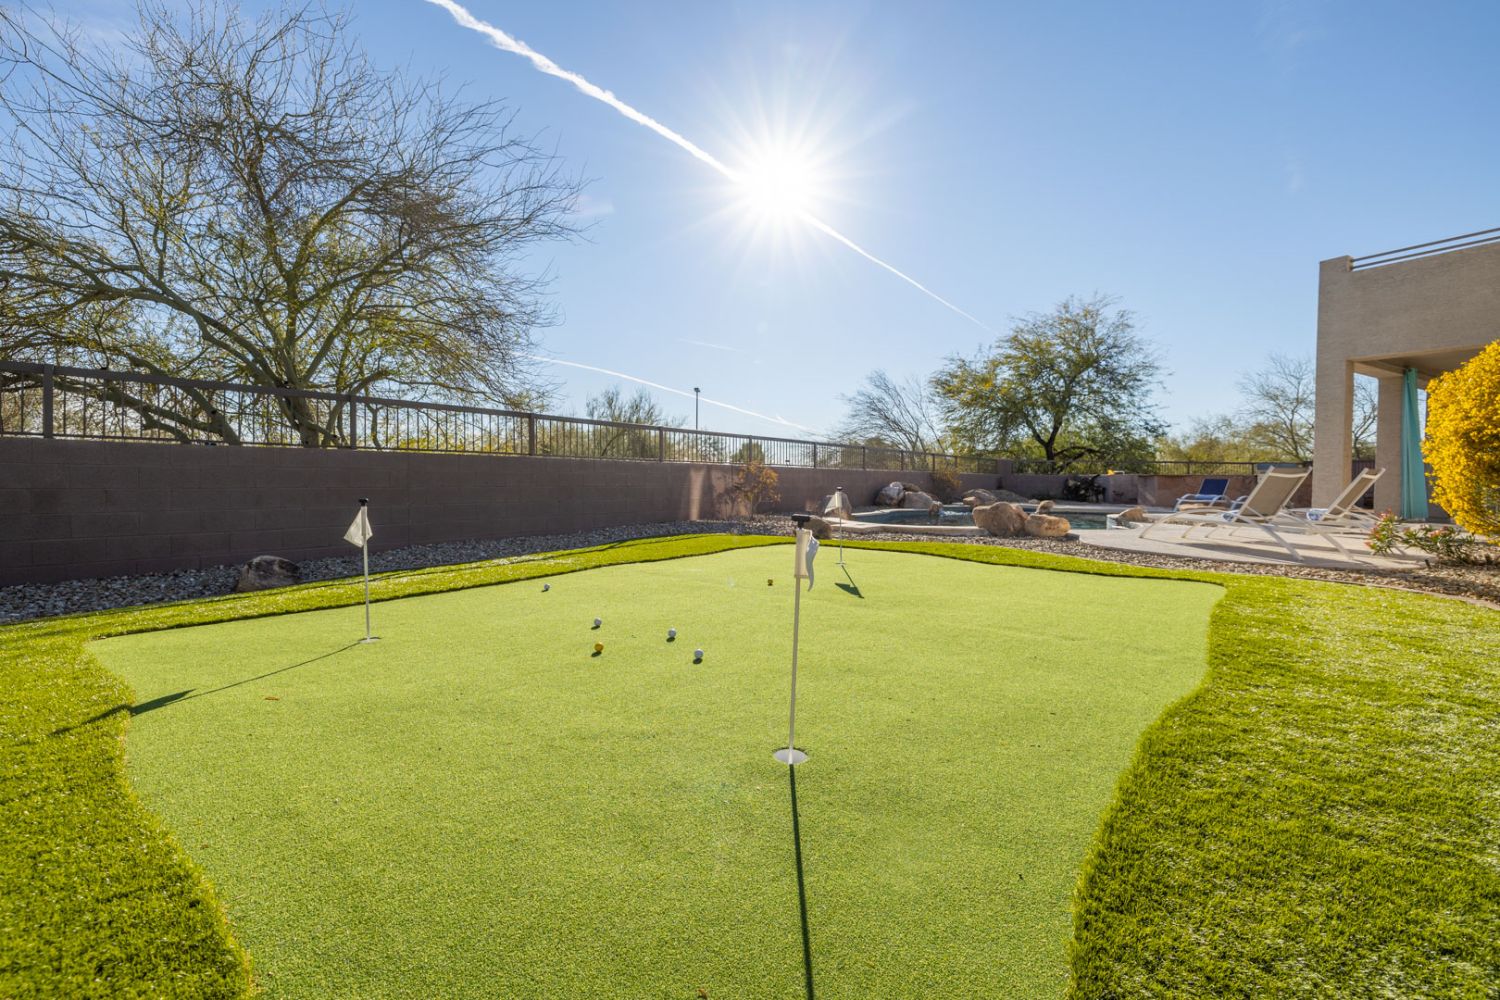 Golfer's dream, pro backyard putting green - 